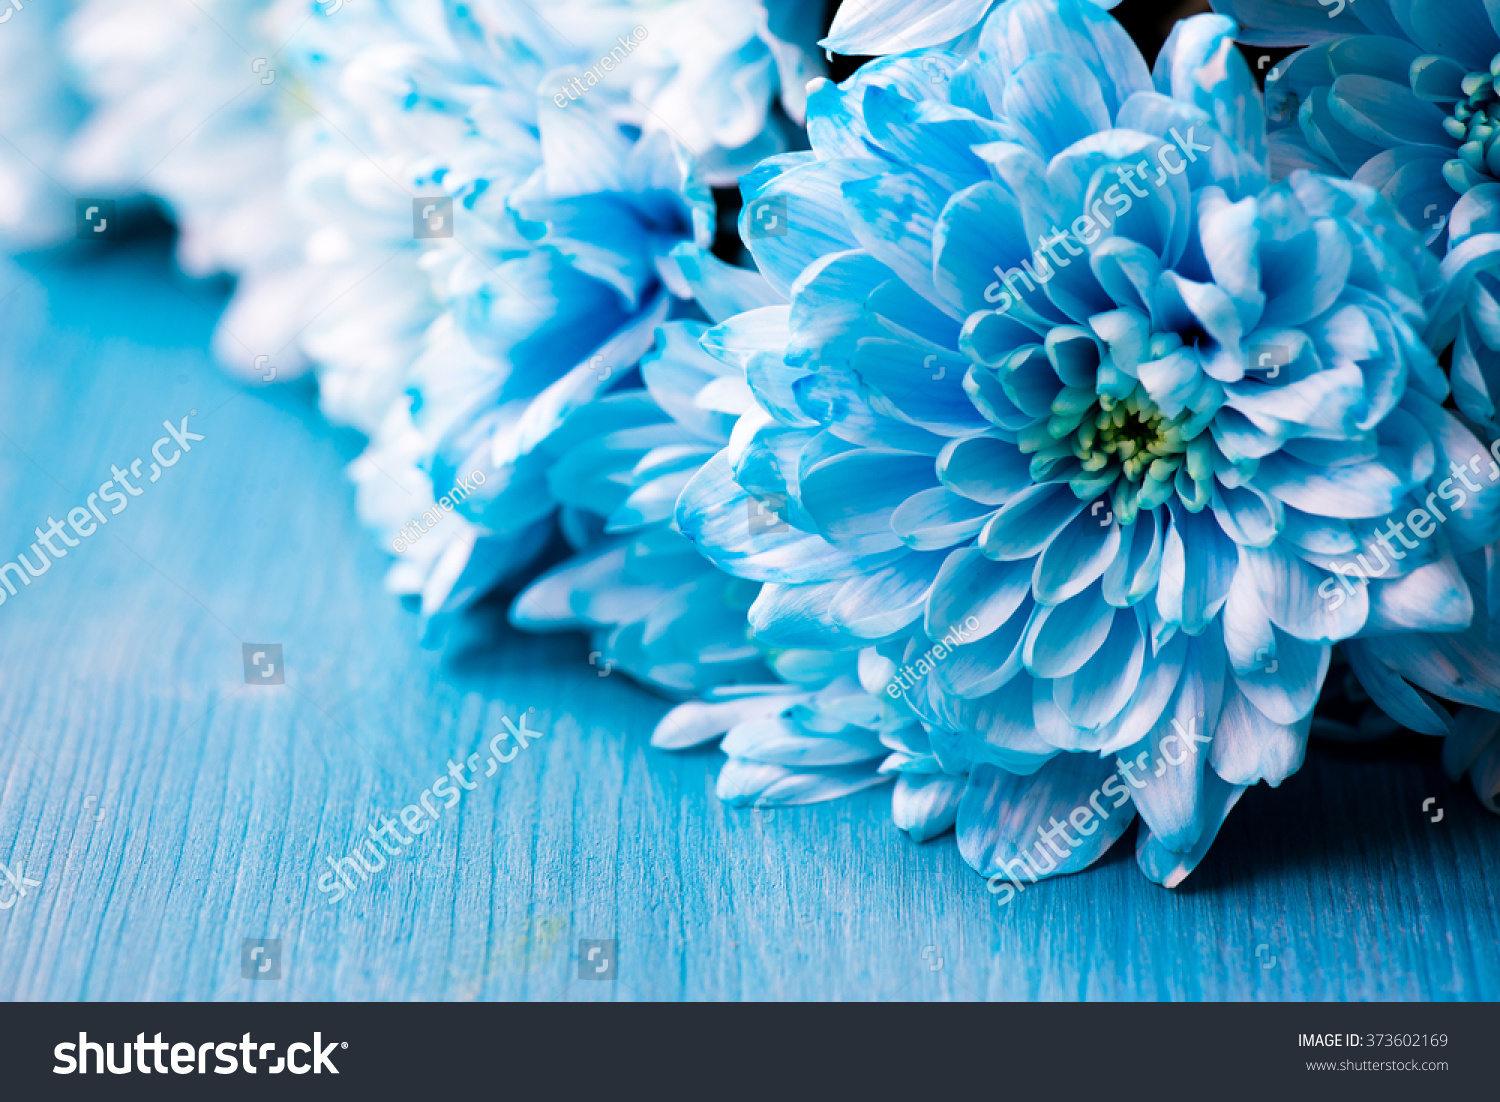 bouquet of fresh blue chrysanthemum flowers #373602169